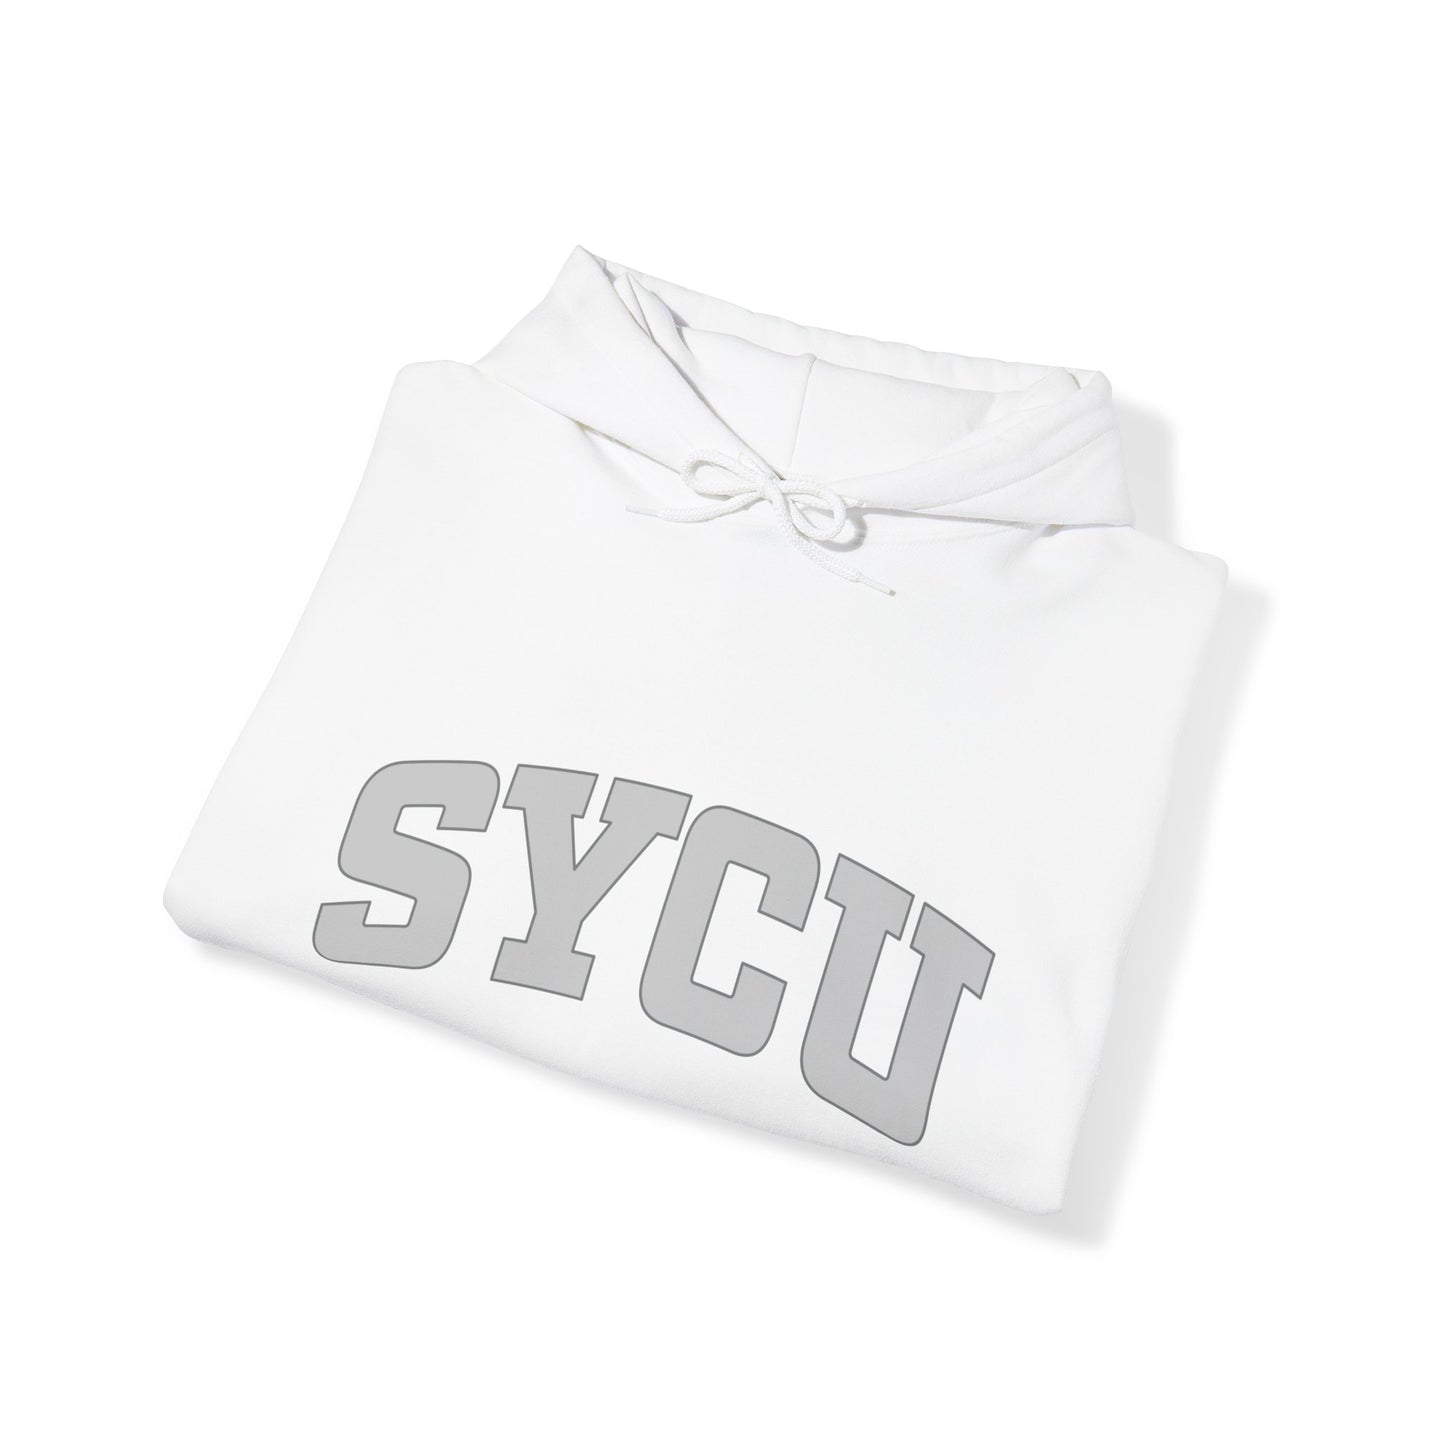 Grey College | SYCU | Hoodie